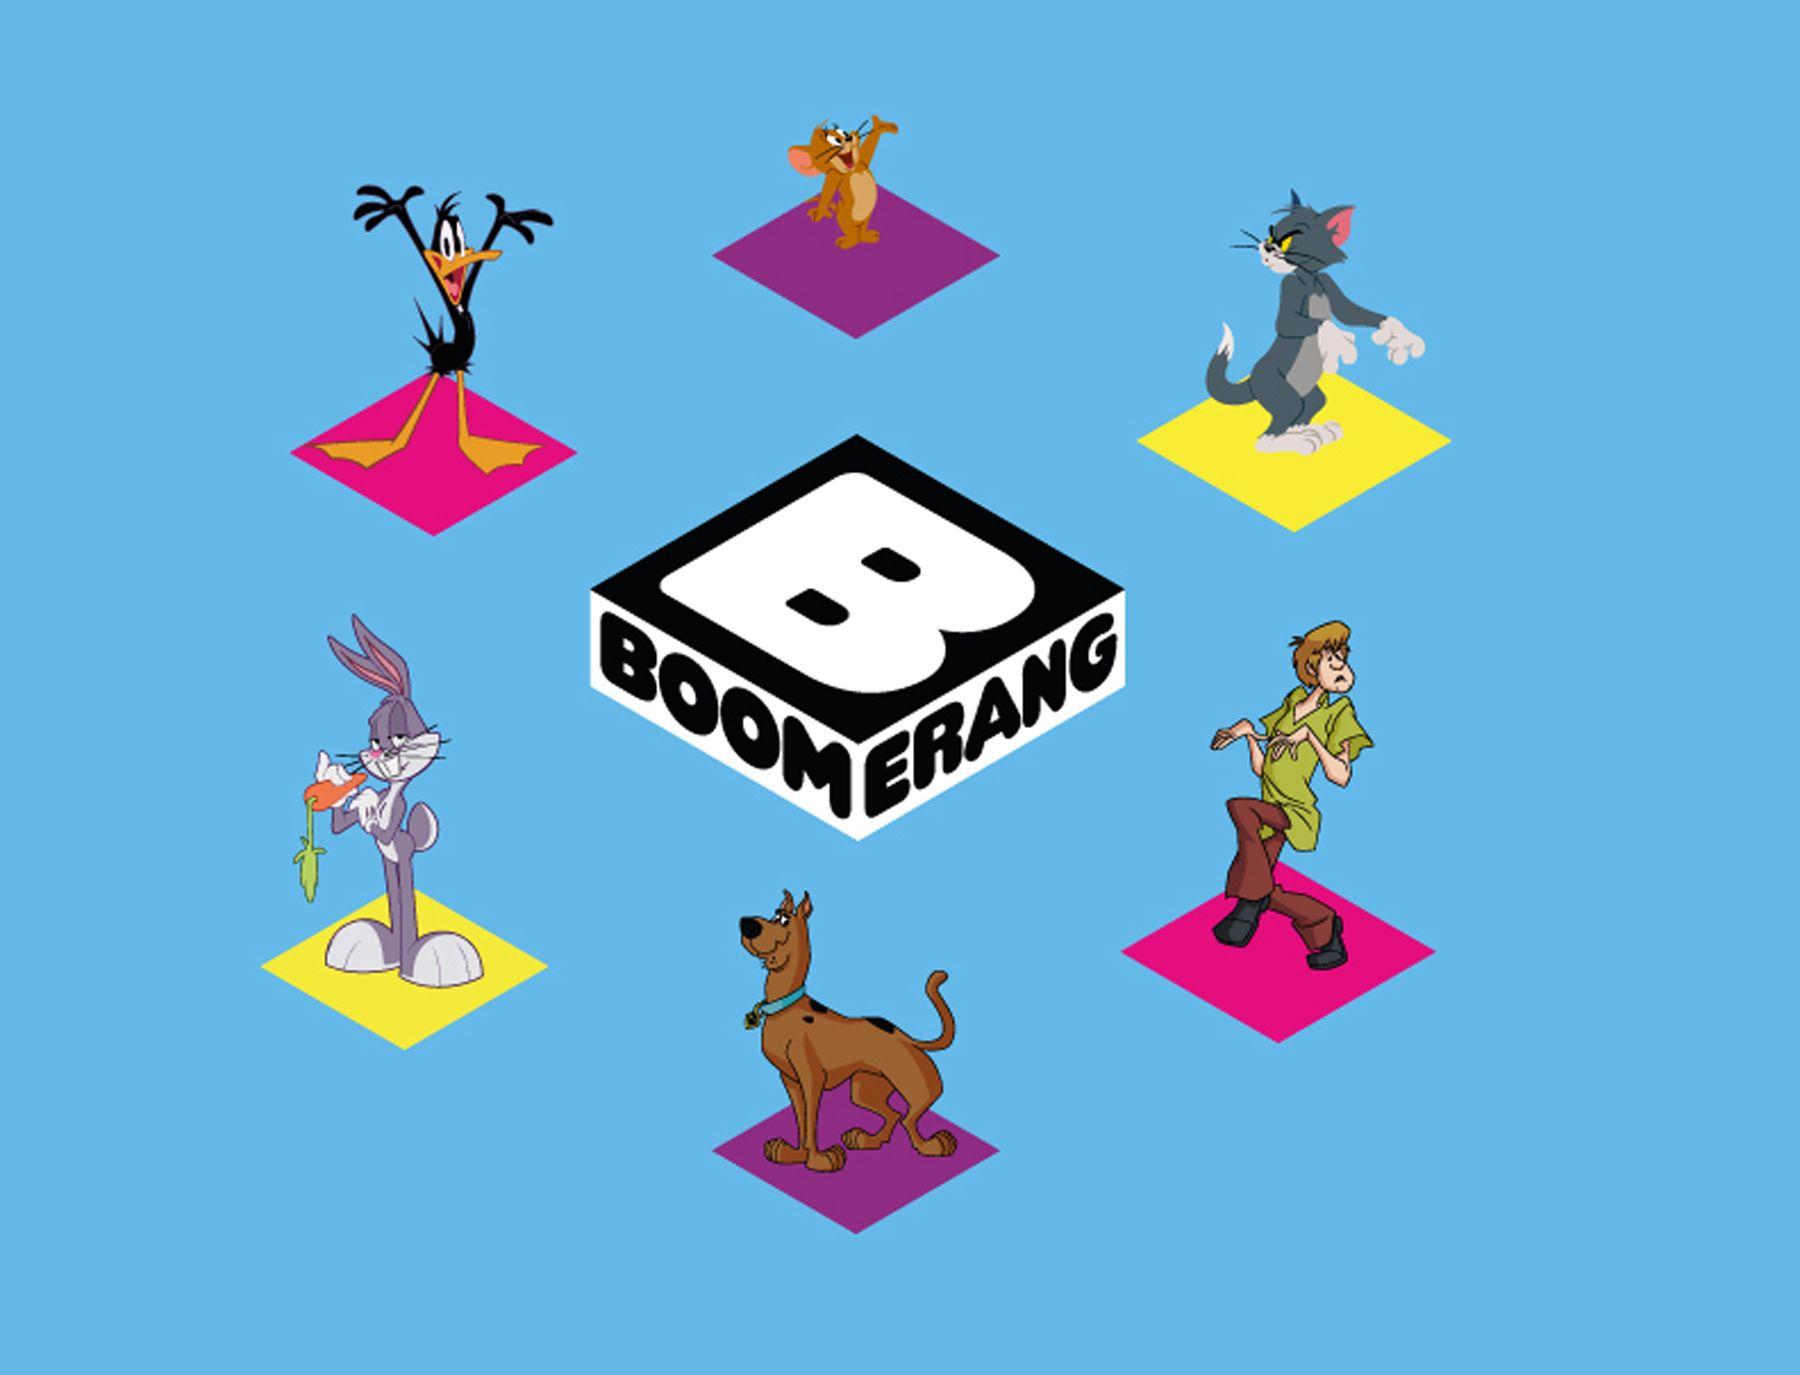 Boomerang Cartoon Network UK Logo - Kidscreen » Archive » Boomerang lands in Korean market